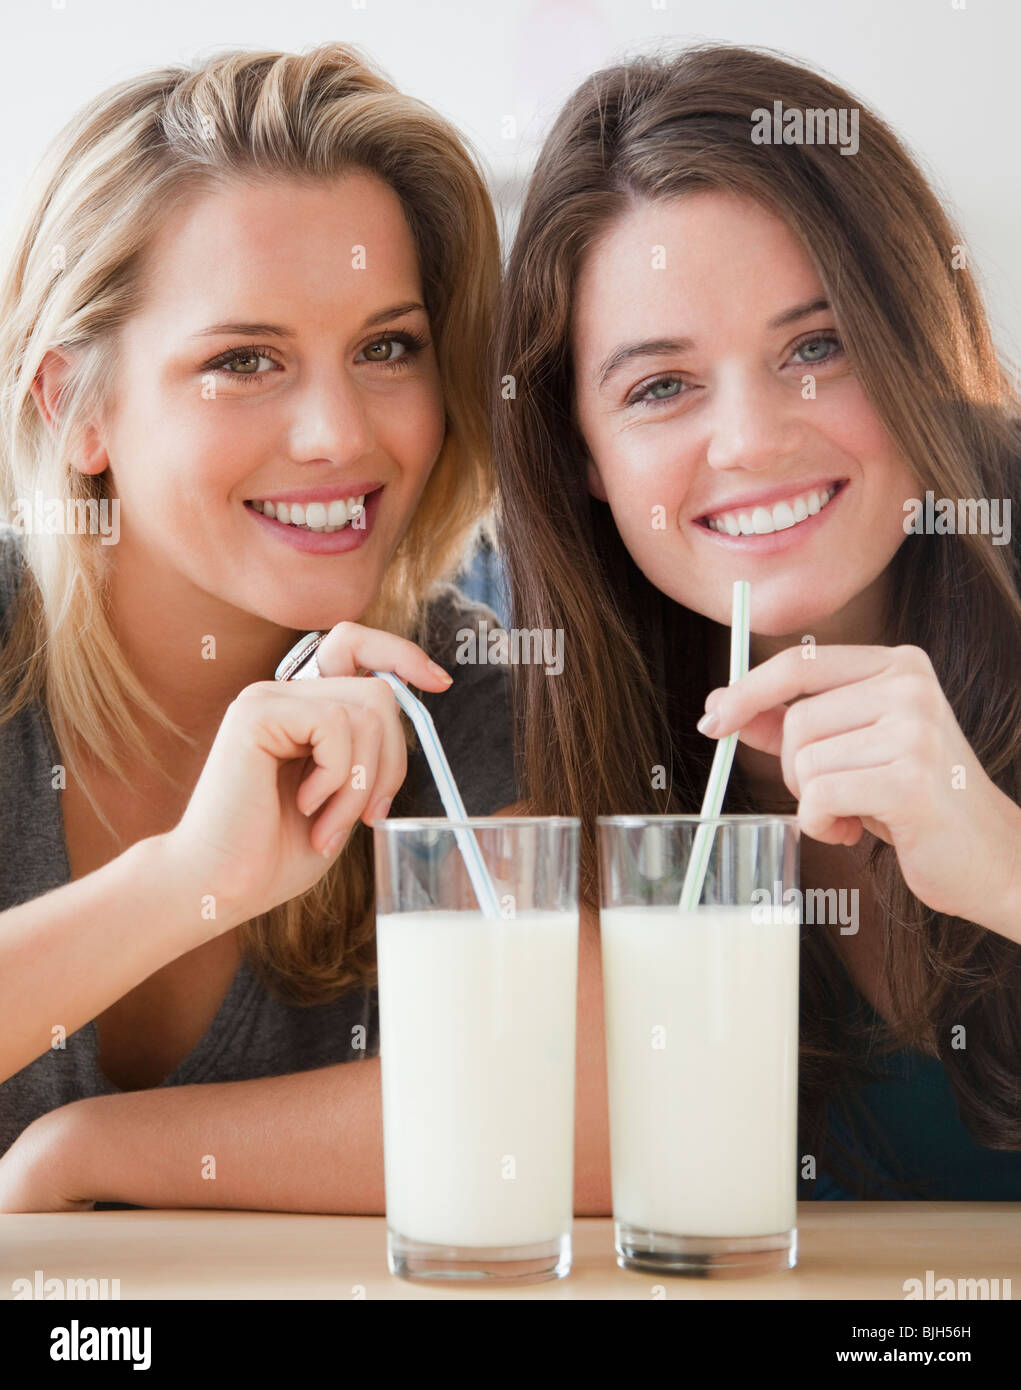 Friends drinking milk Stock Photo